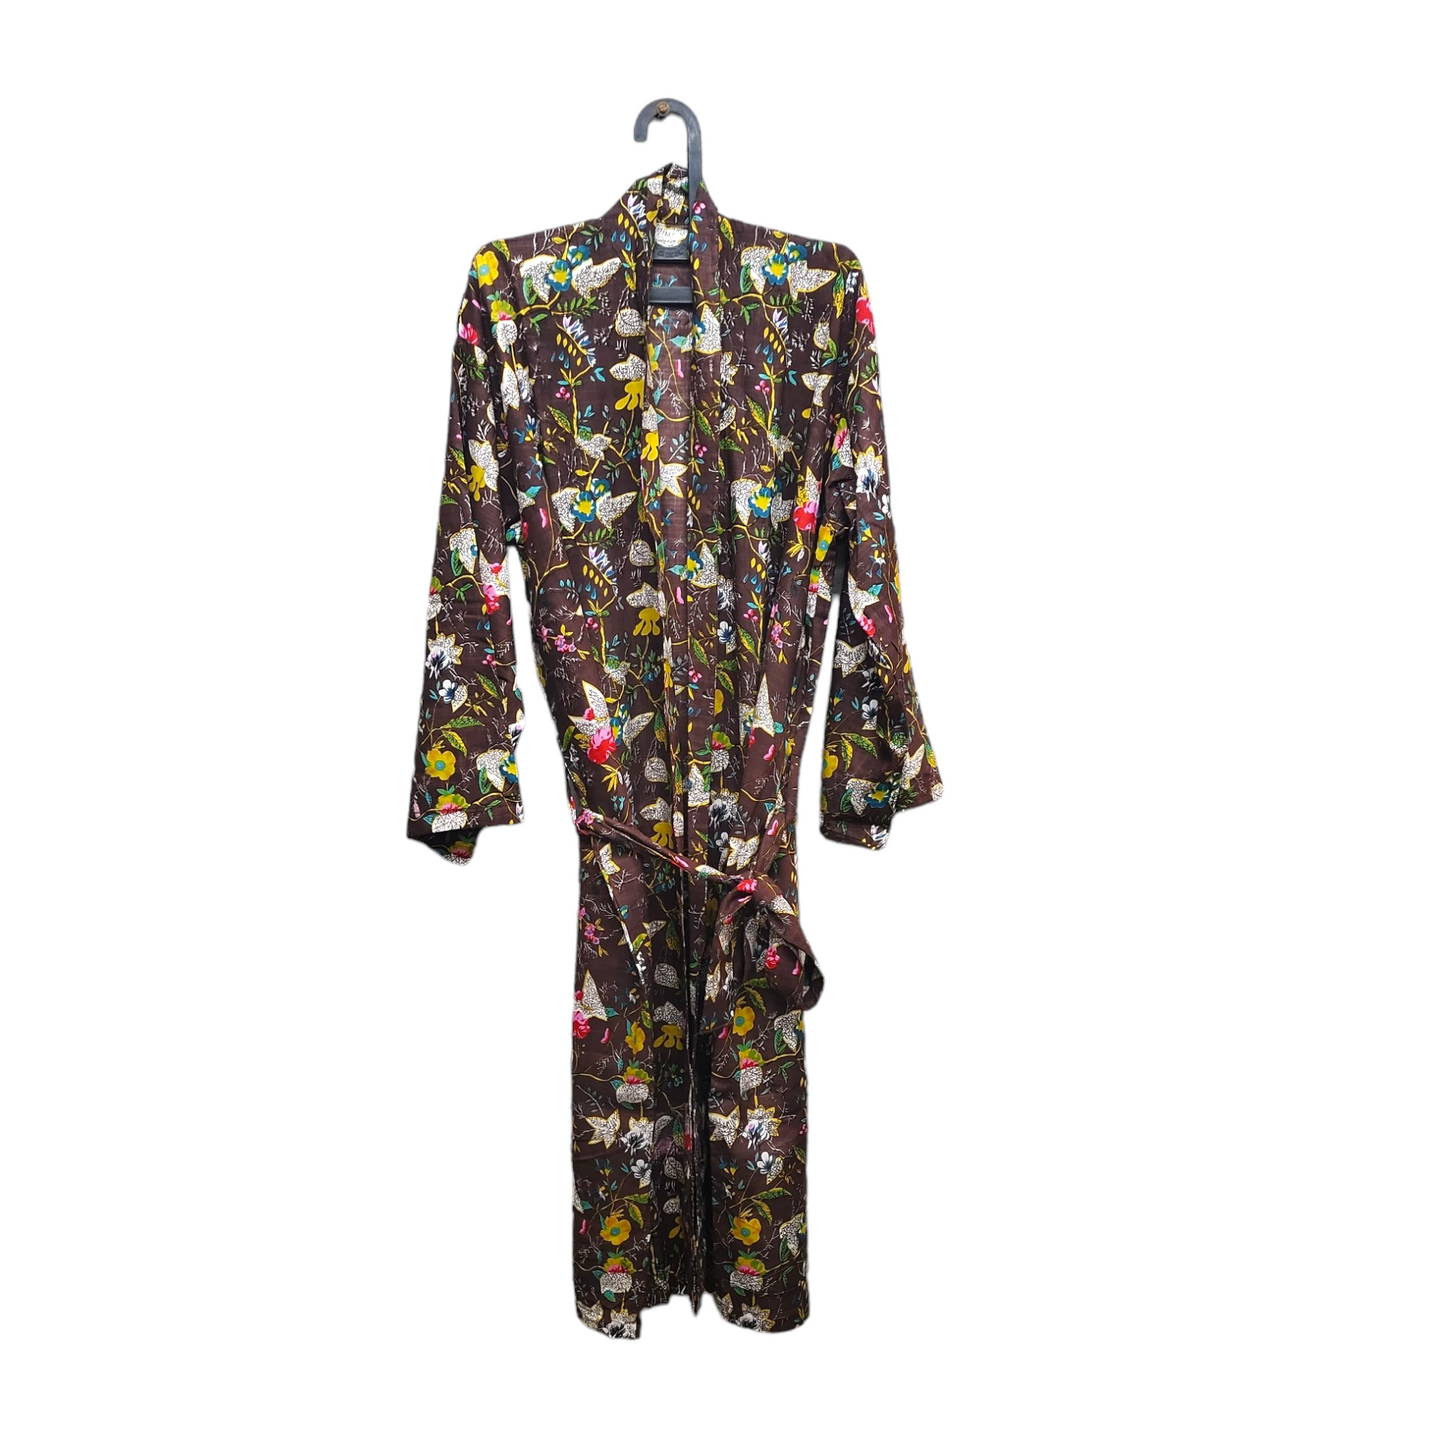 Kimono Bath Robes/ Night Suit - Bird2 Brown